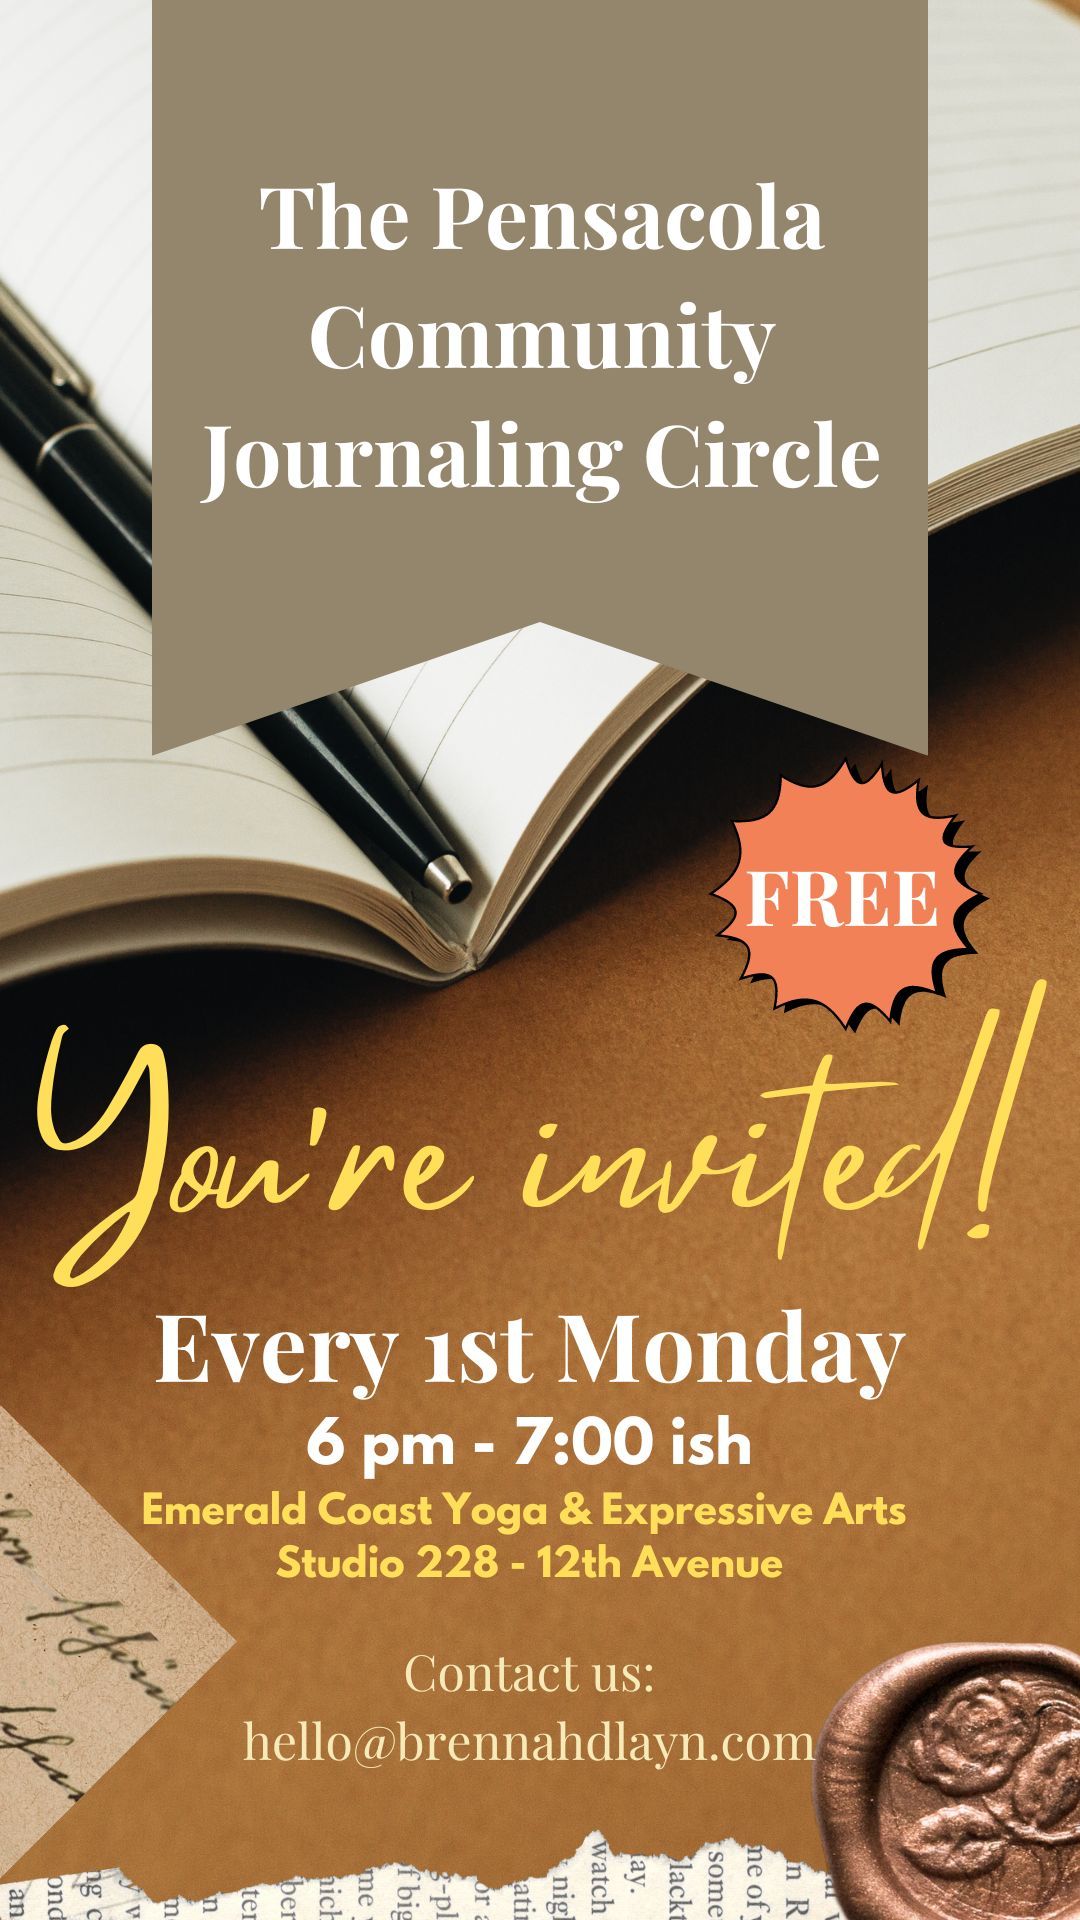 The Pensacola Community Journaling Circle